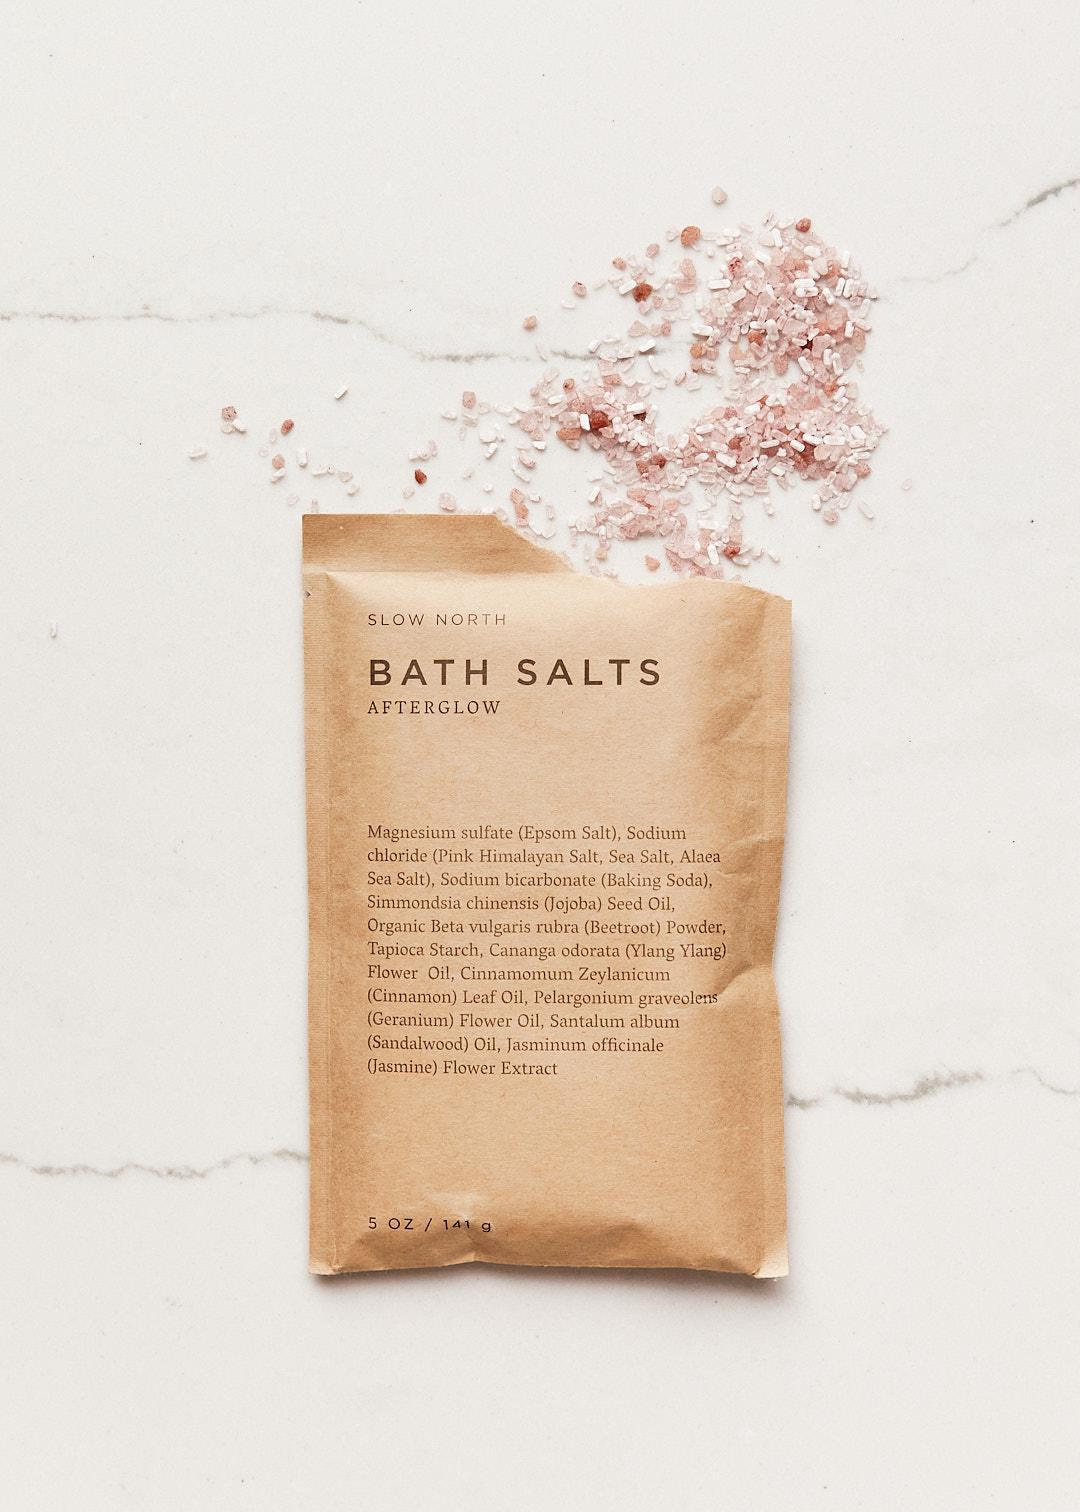 Afterglow Bath Salts